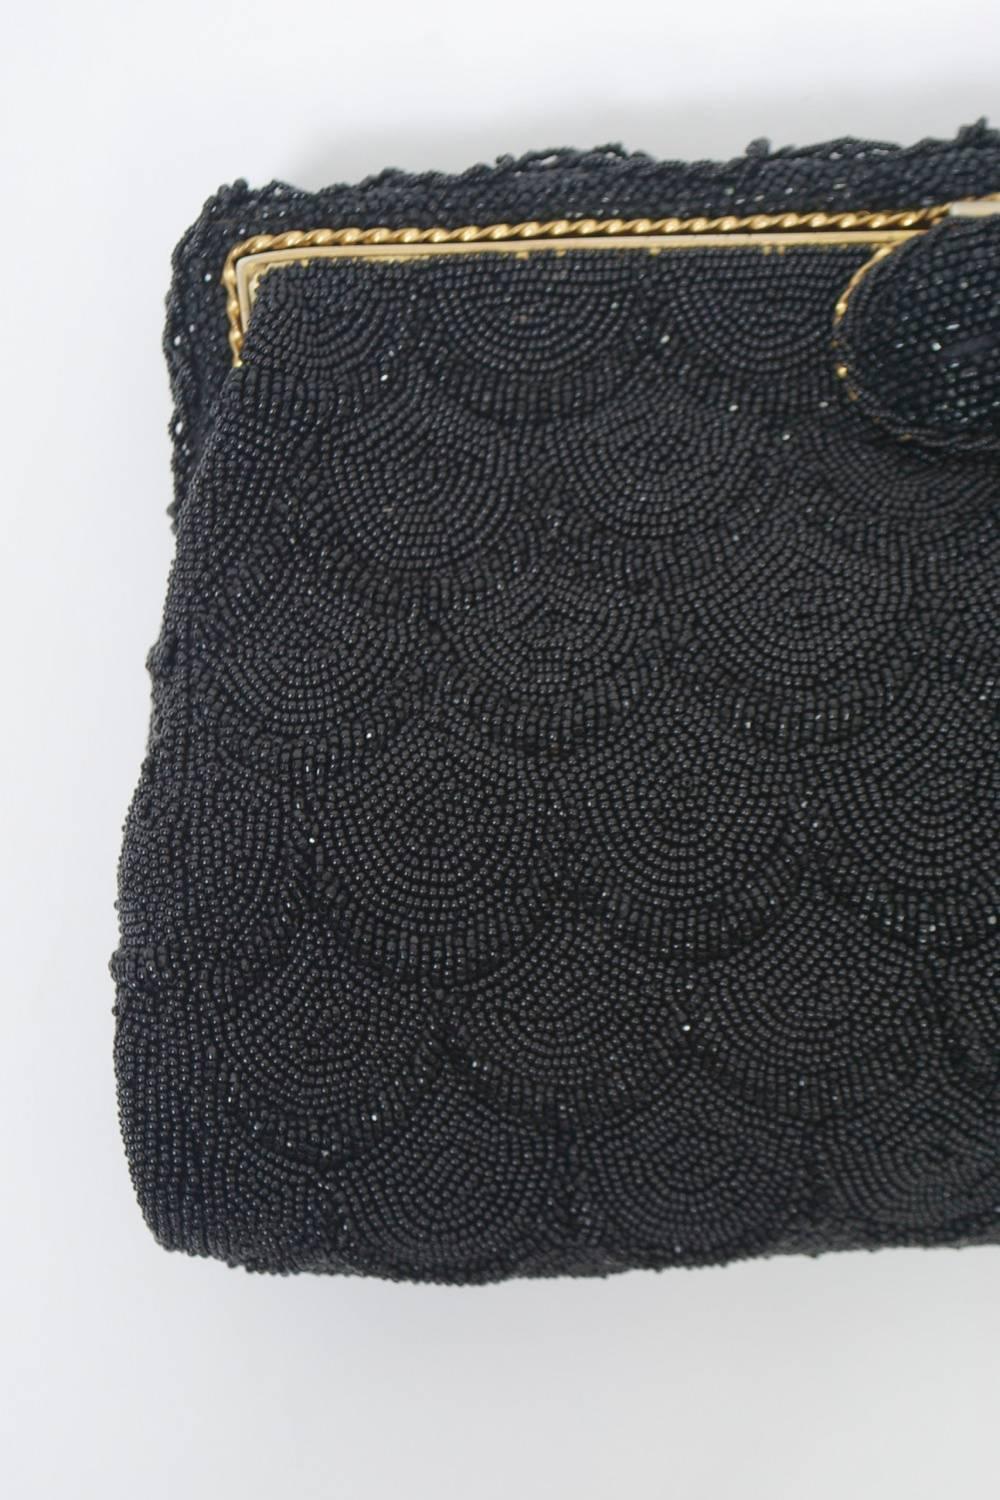 Women's Vintage Black Beaded Clutch For Sale